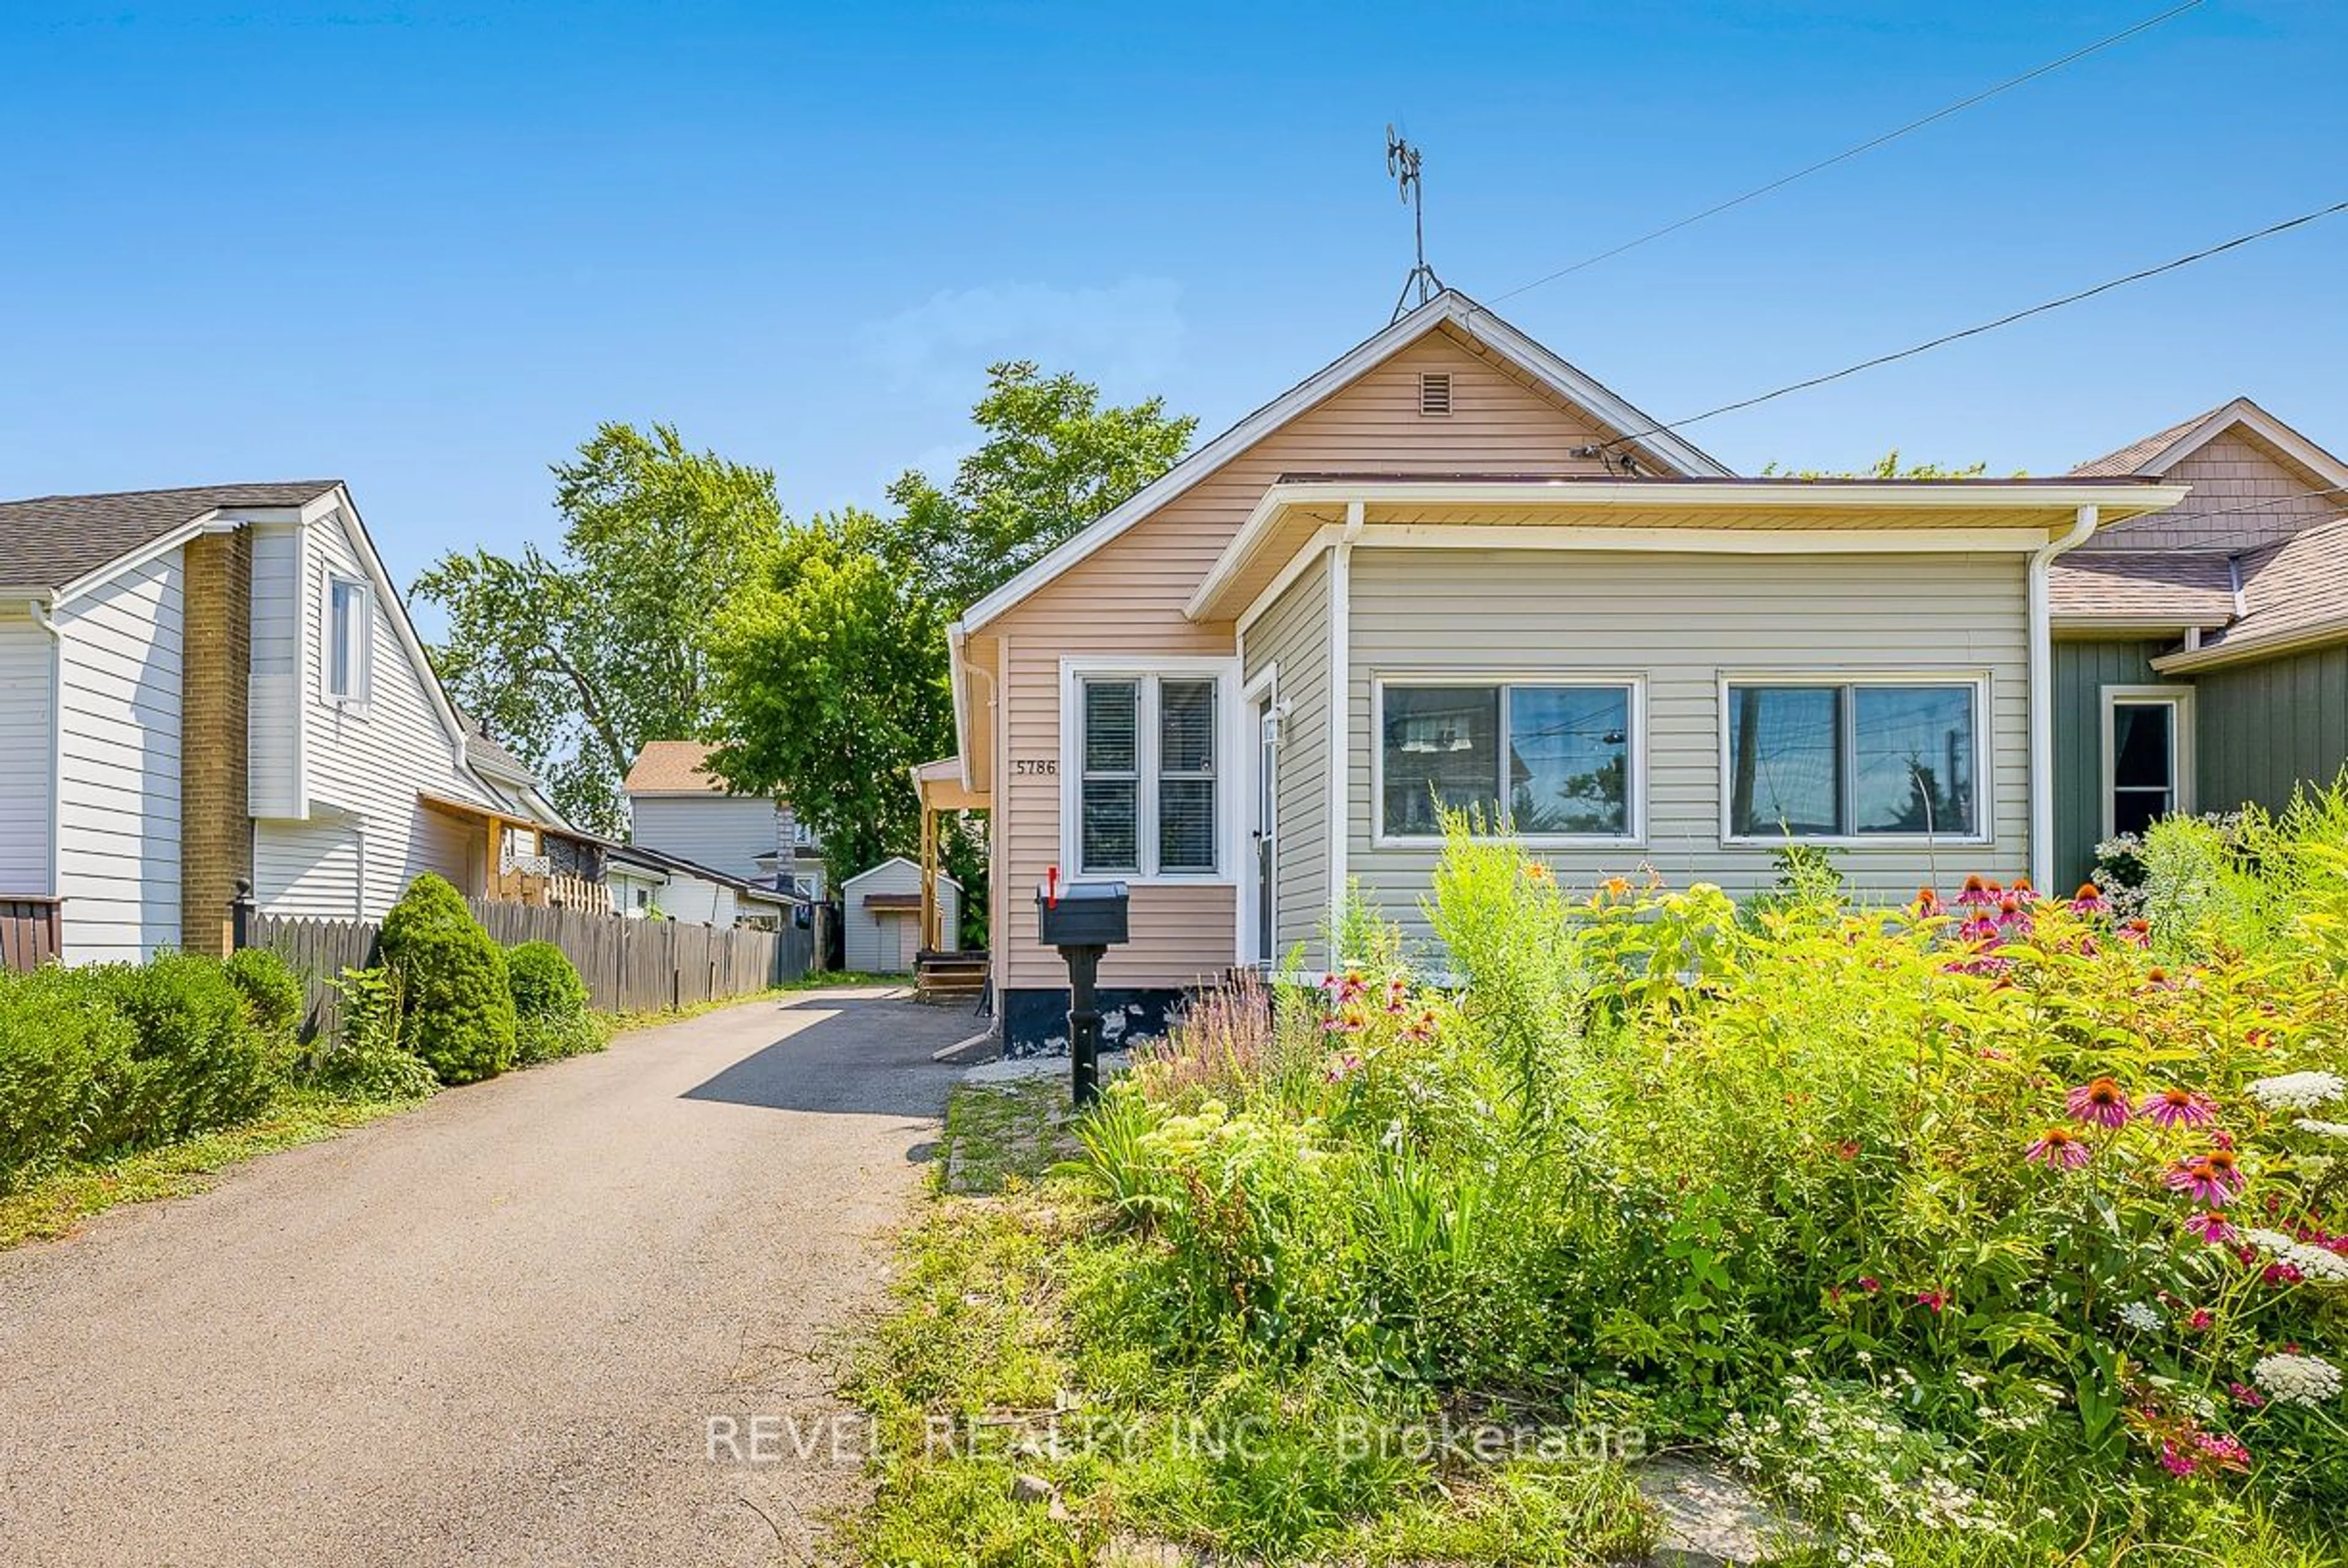 Cottage for 5786 Peer St, Niagara Falls Ontario L2G 1X2